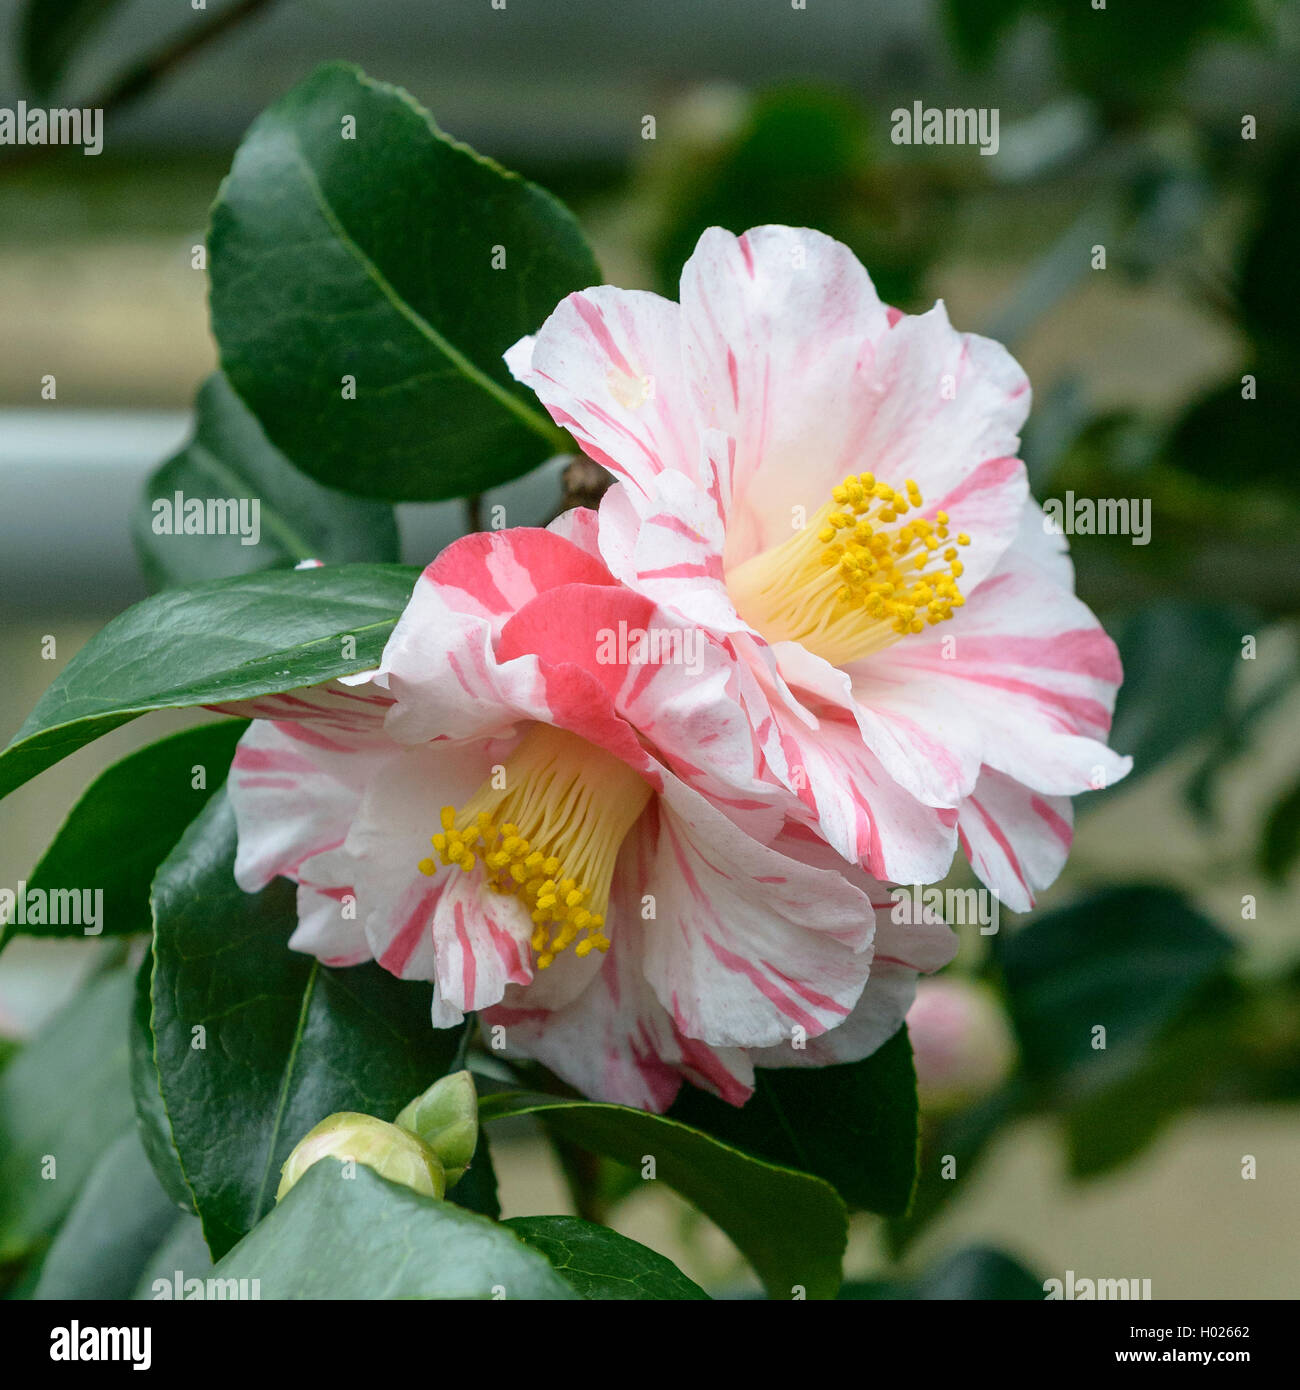 Japanese camellia (Camellia japonica 'Tricolor', Camellia japonica Tricolor), cultivar Tricolor Stock Photo